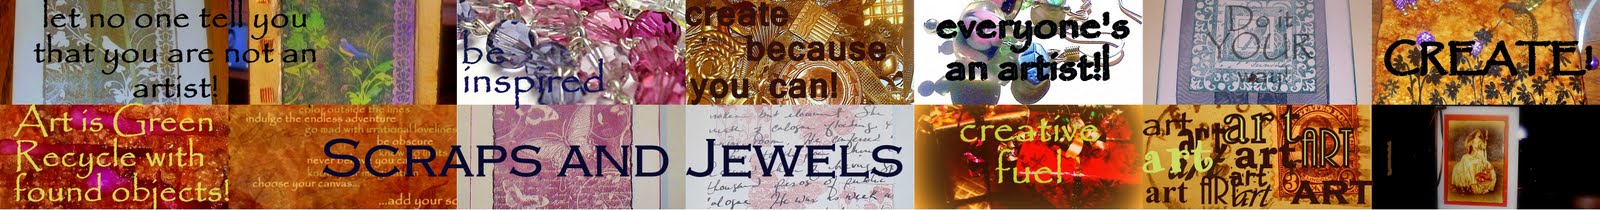 Scraps and Jewels